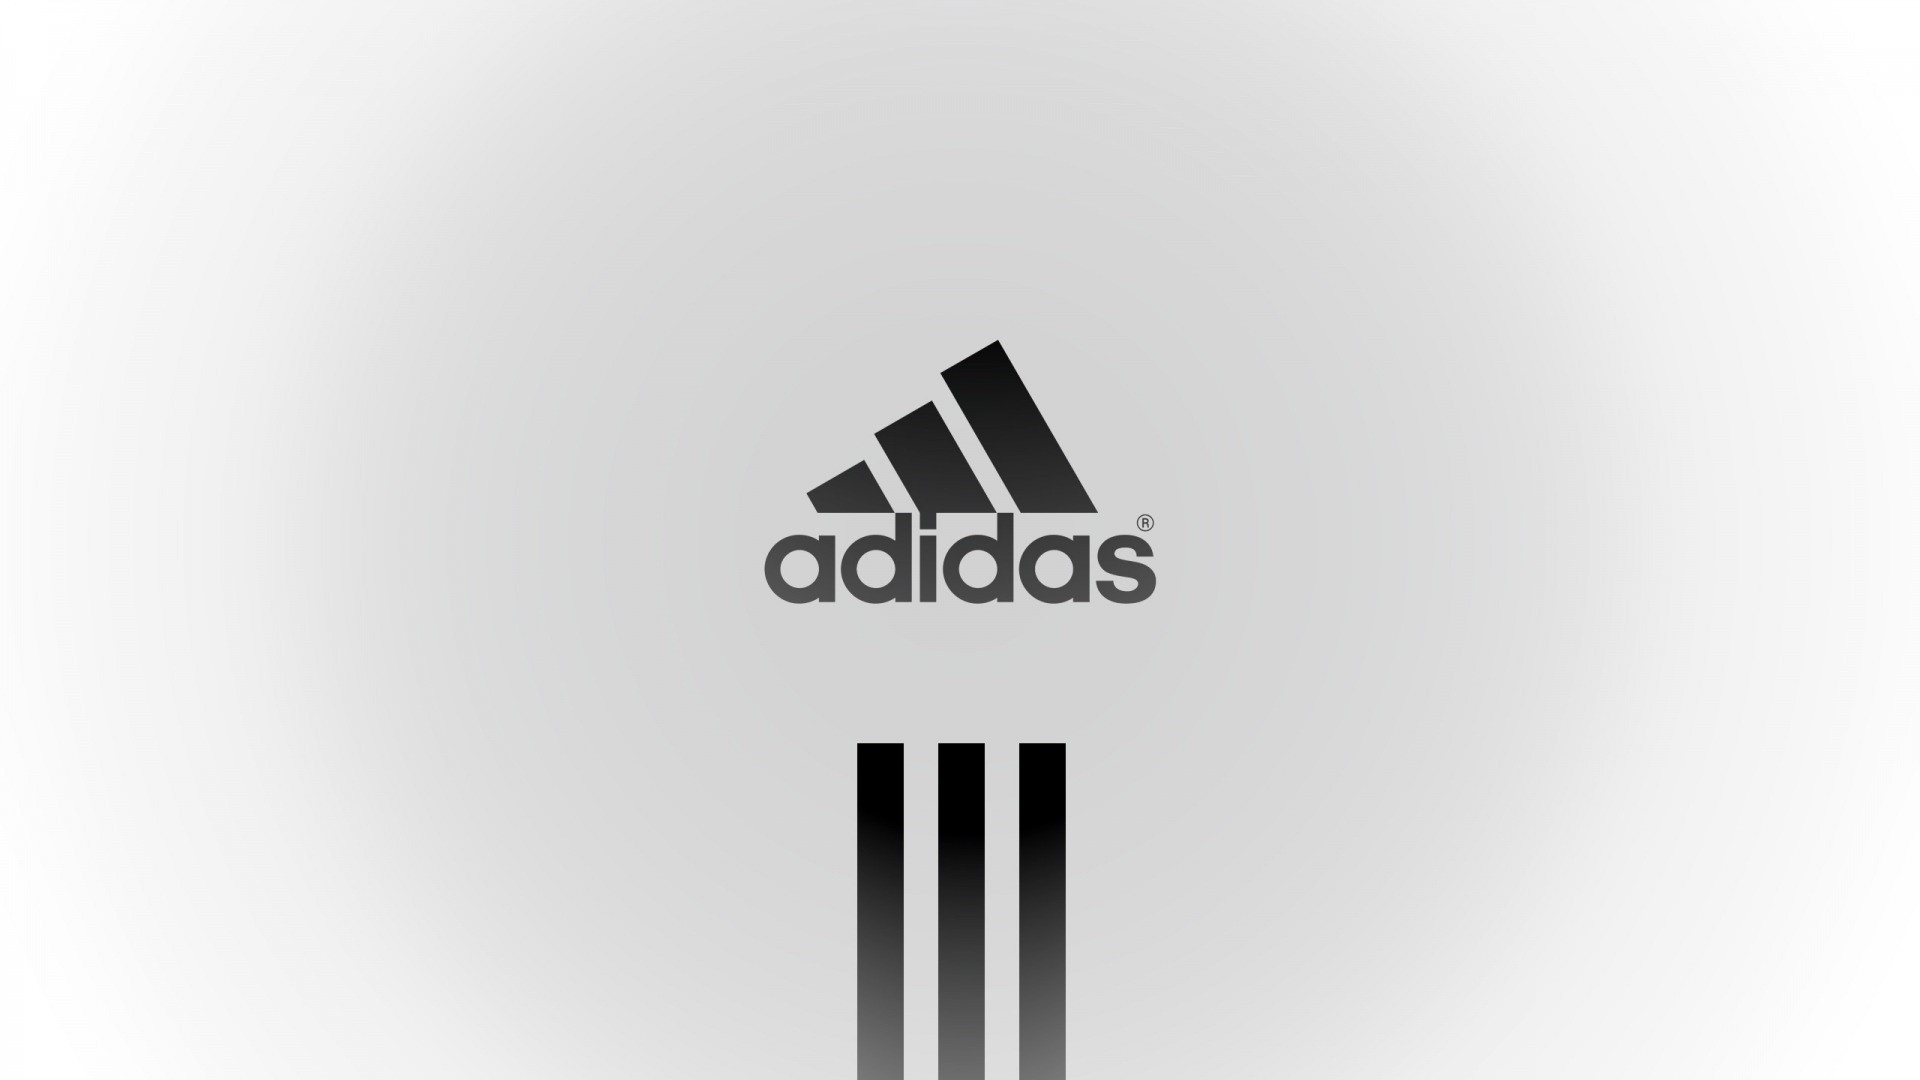 General 1920x1080 Adidas sport logo brand minimalism white background simple background